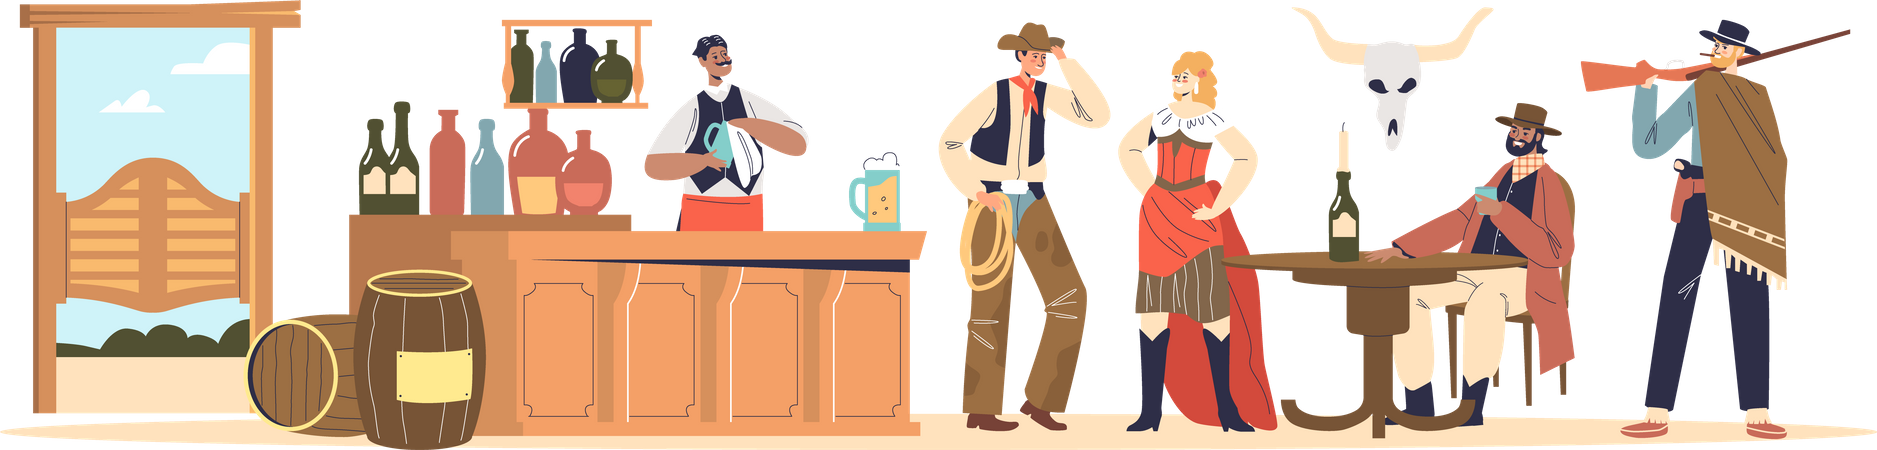 Cowboys in Westernkleidung trinken im Retro-Pub  Illustration